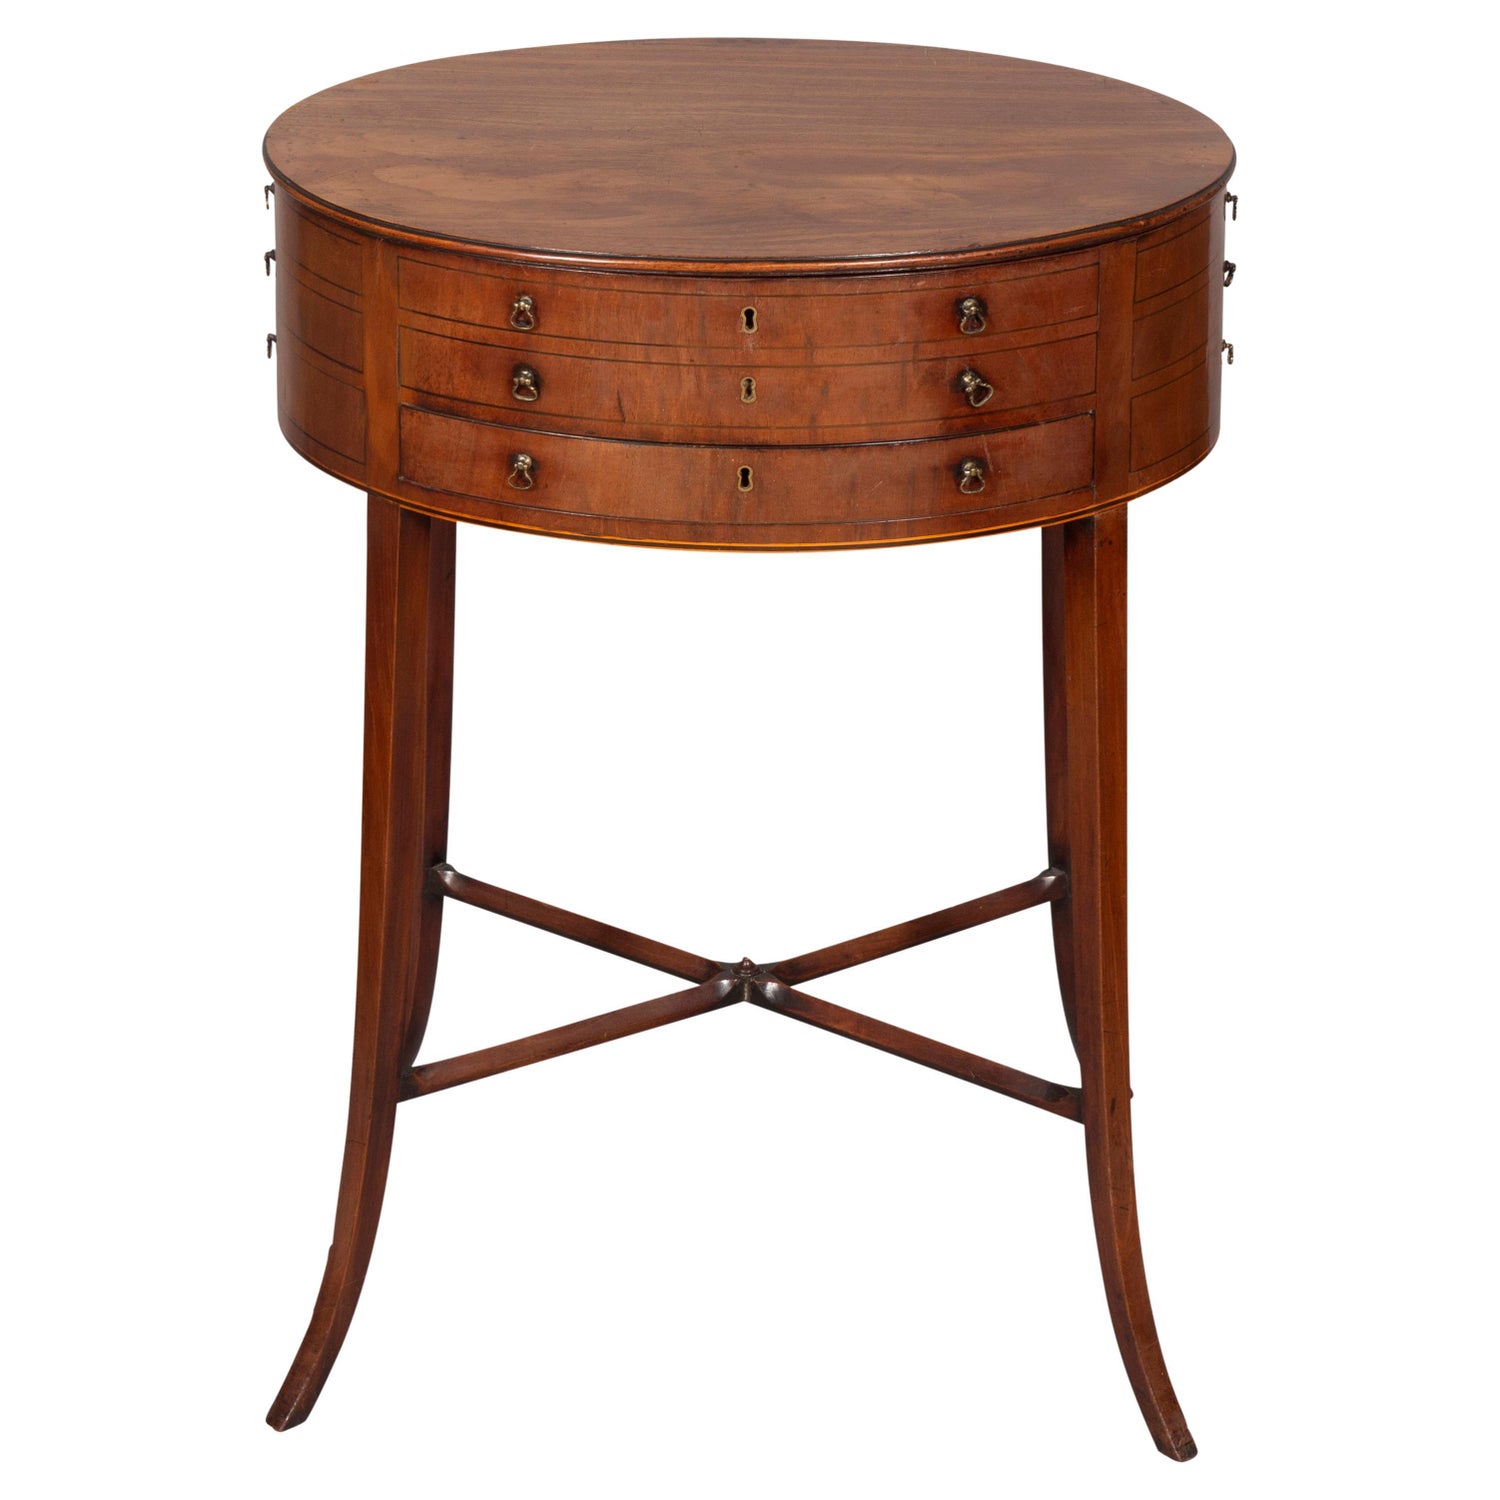 Lot - A George III oak cricket table, late 18th century